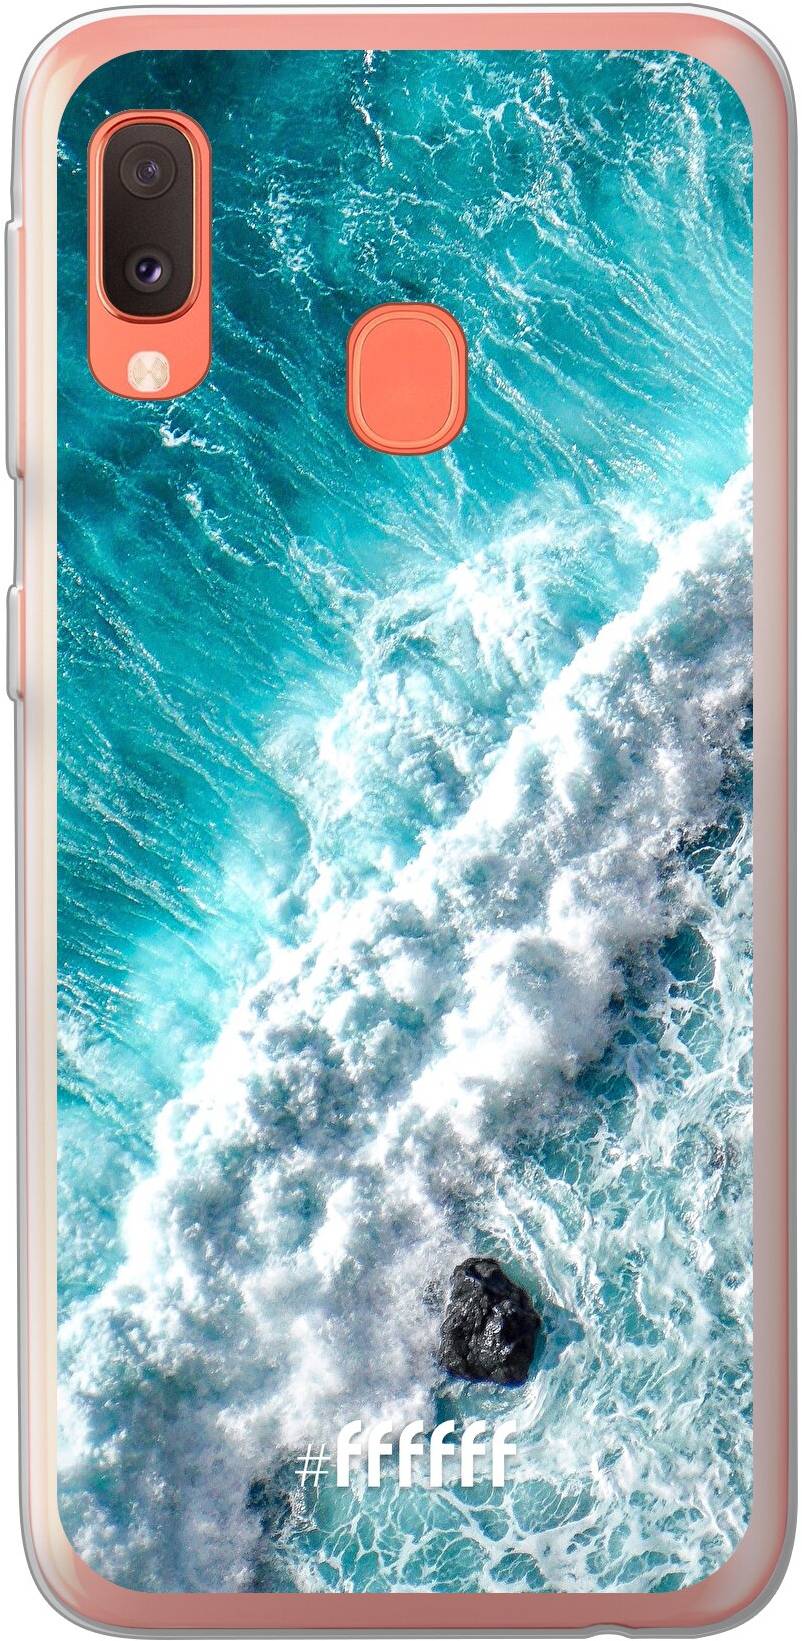 Perfect to Surf Galaxy A20e